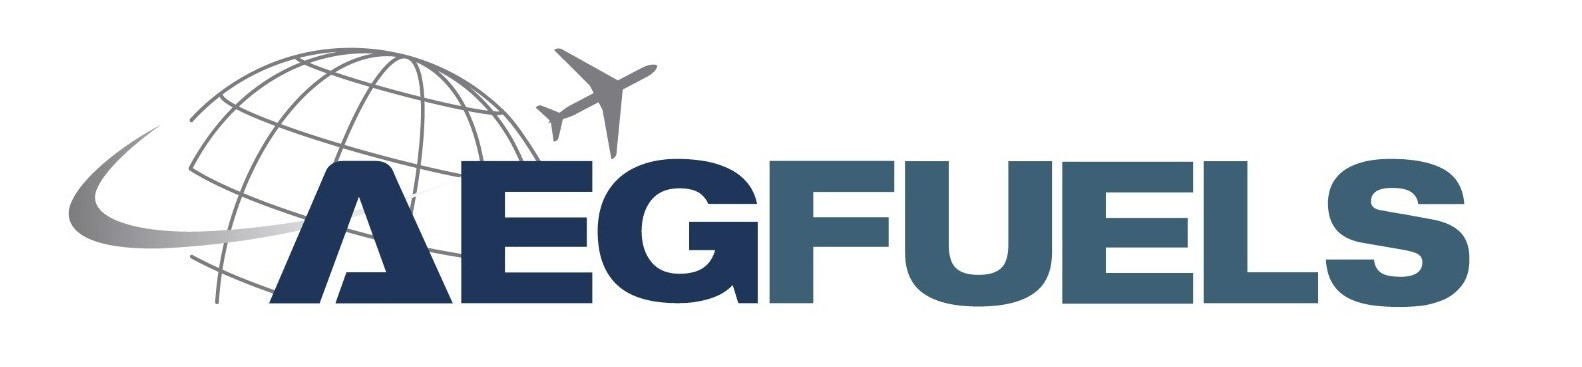 AEG FUELS logo